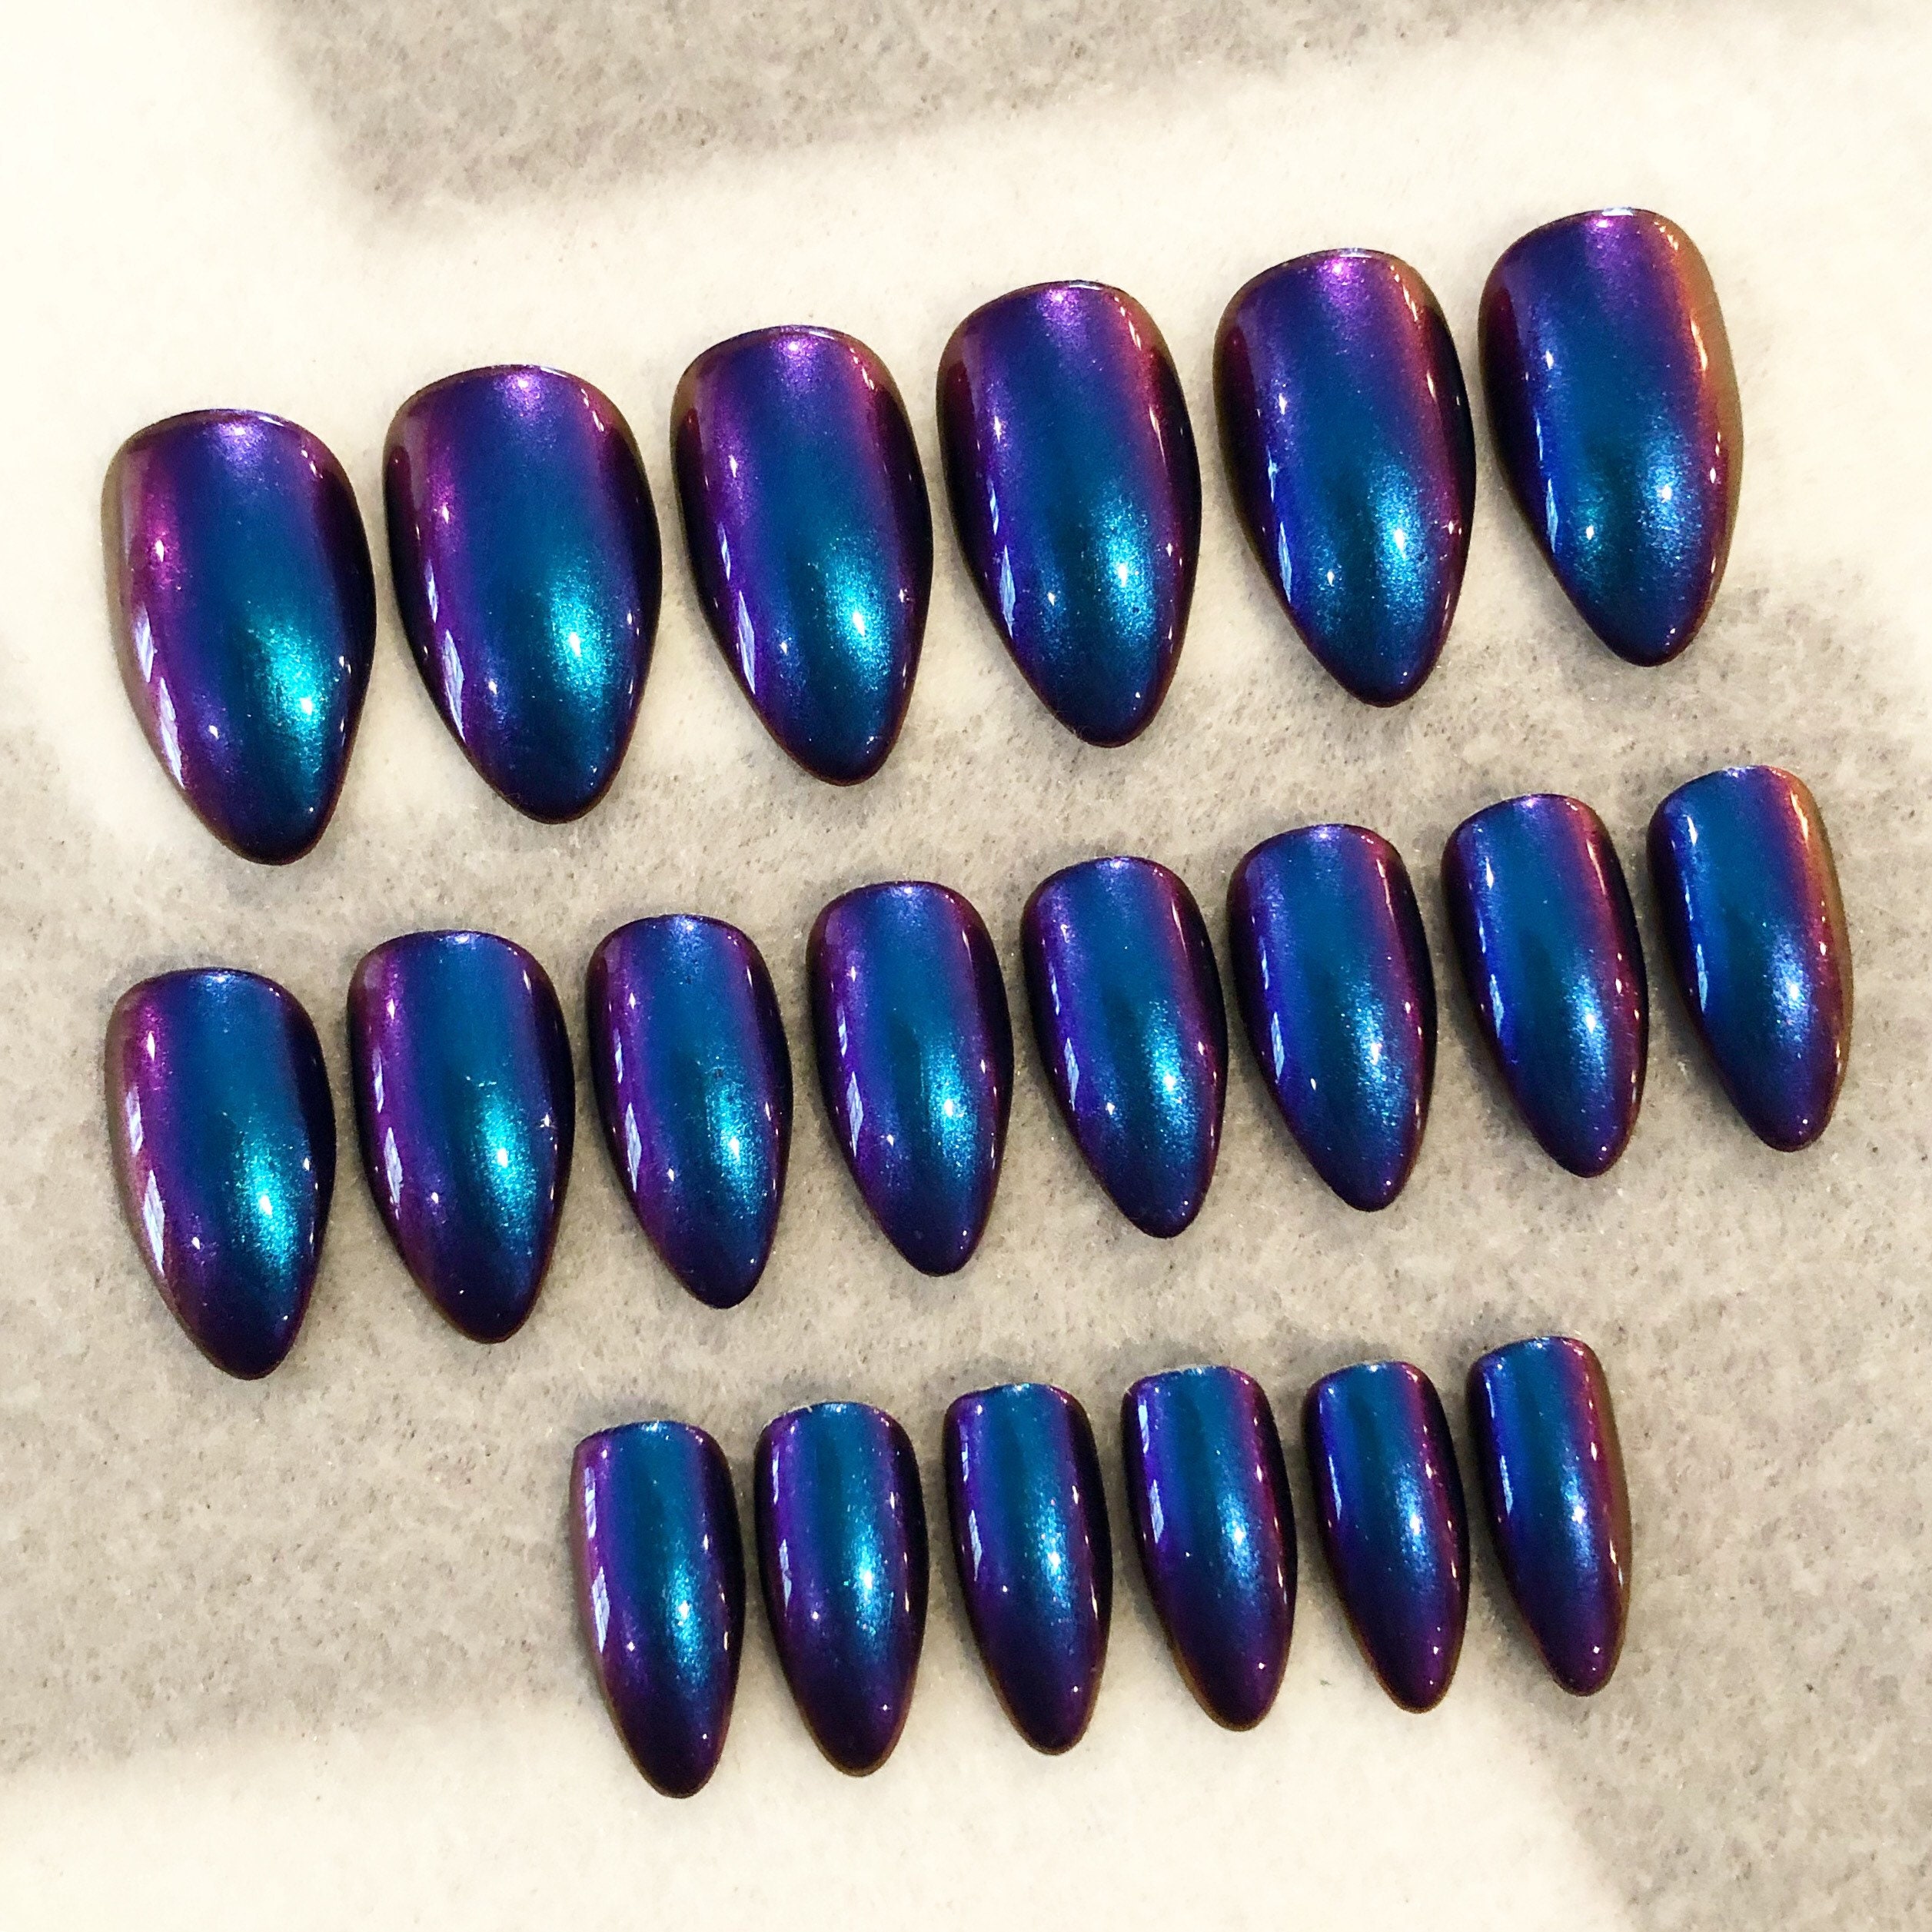 Purple-Blue Chameleon Fake Nails Faux Nails Glue On Nails | Etsy